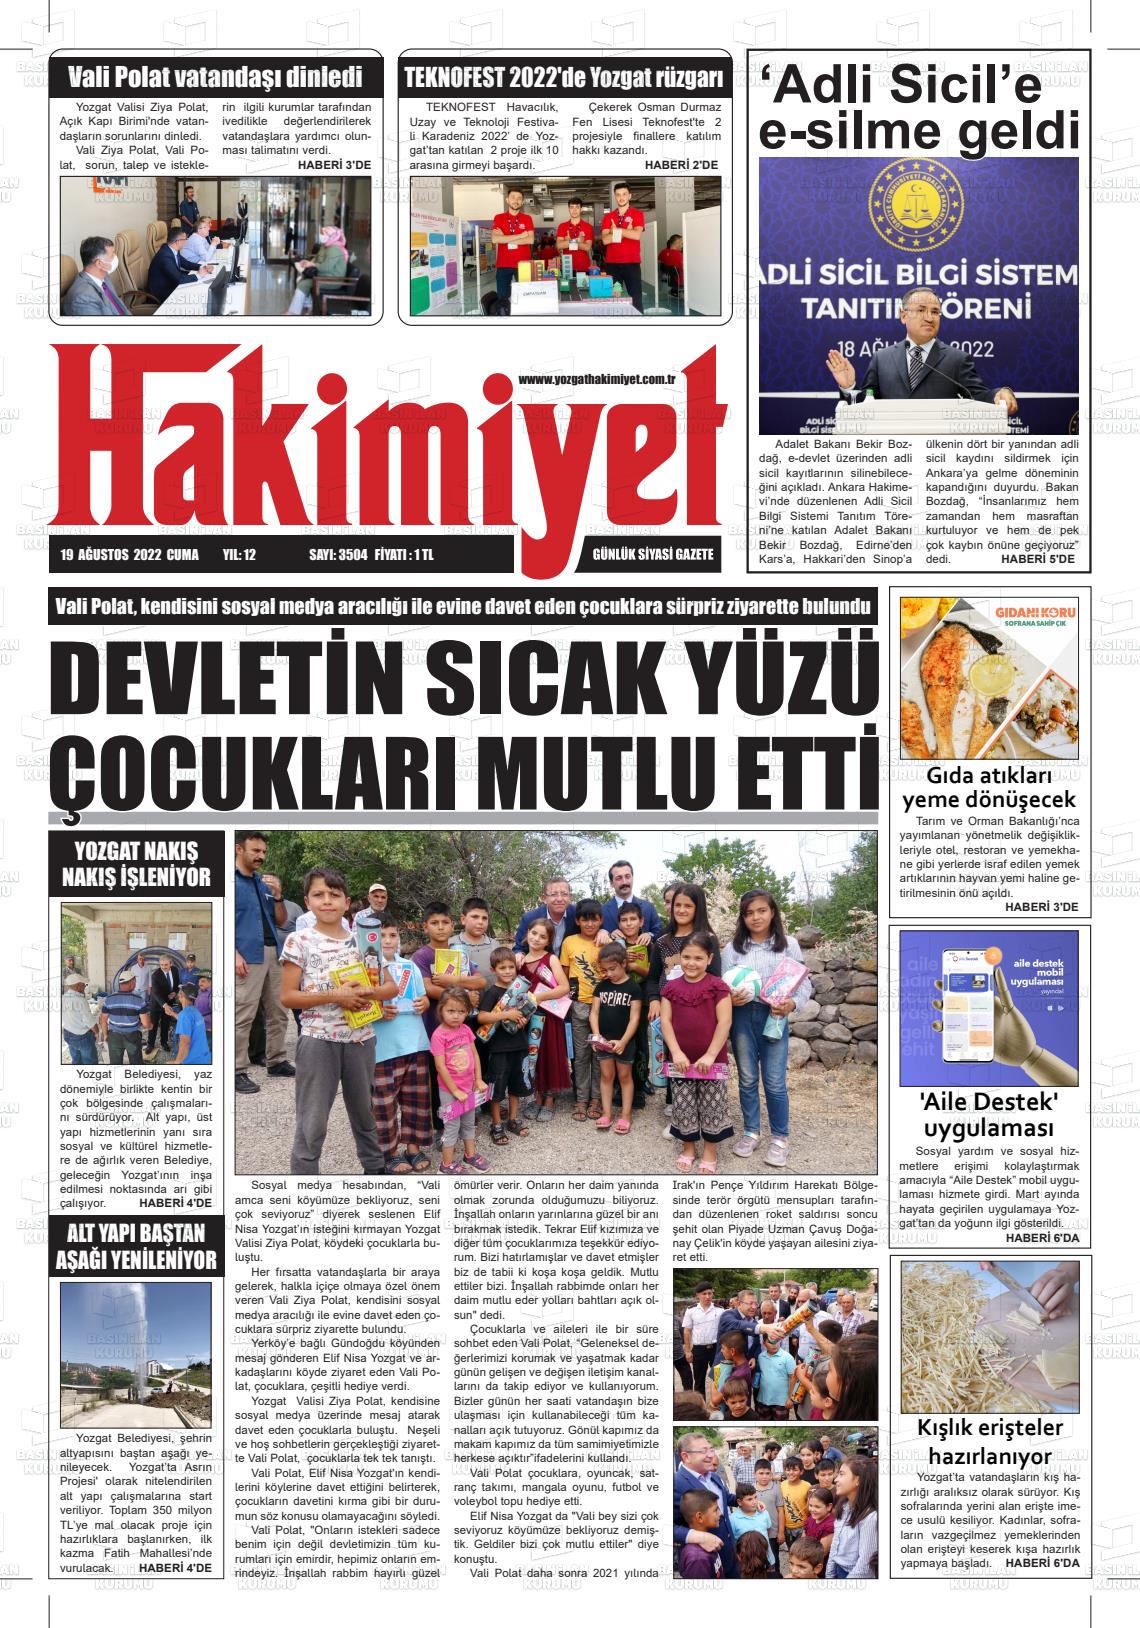 19 Ağustos 2022 Yozgat Hakimiyet Gazete Manşeti